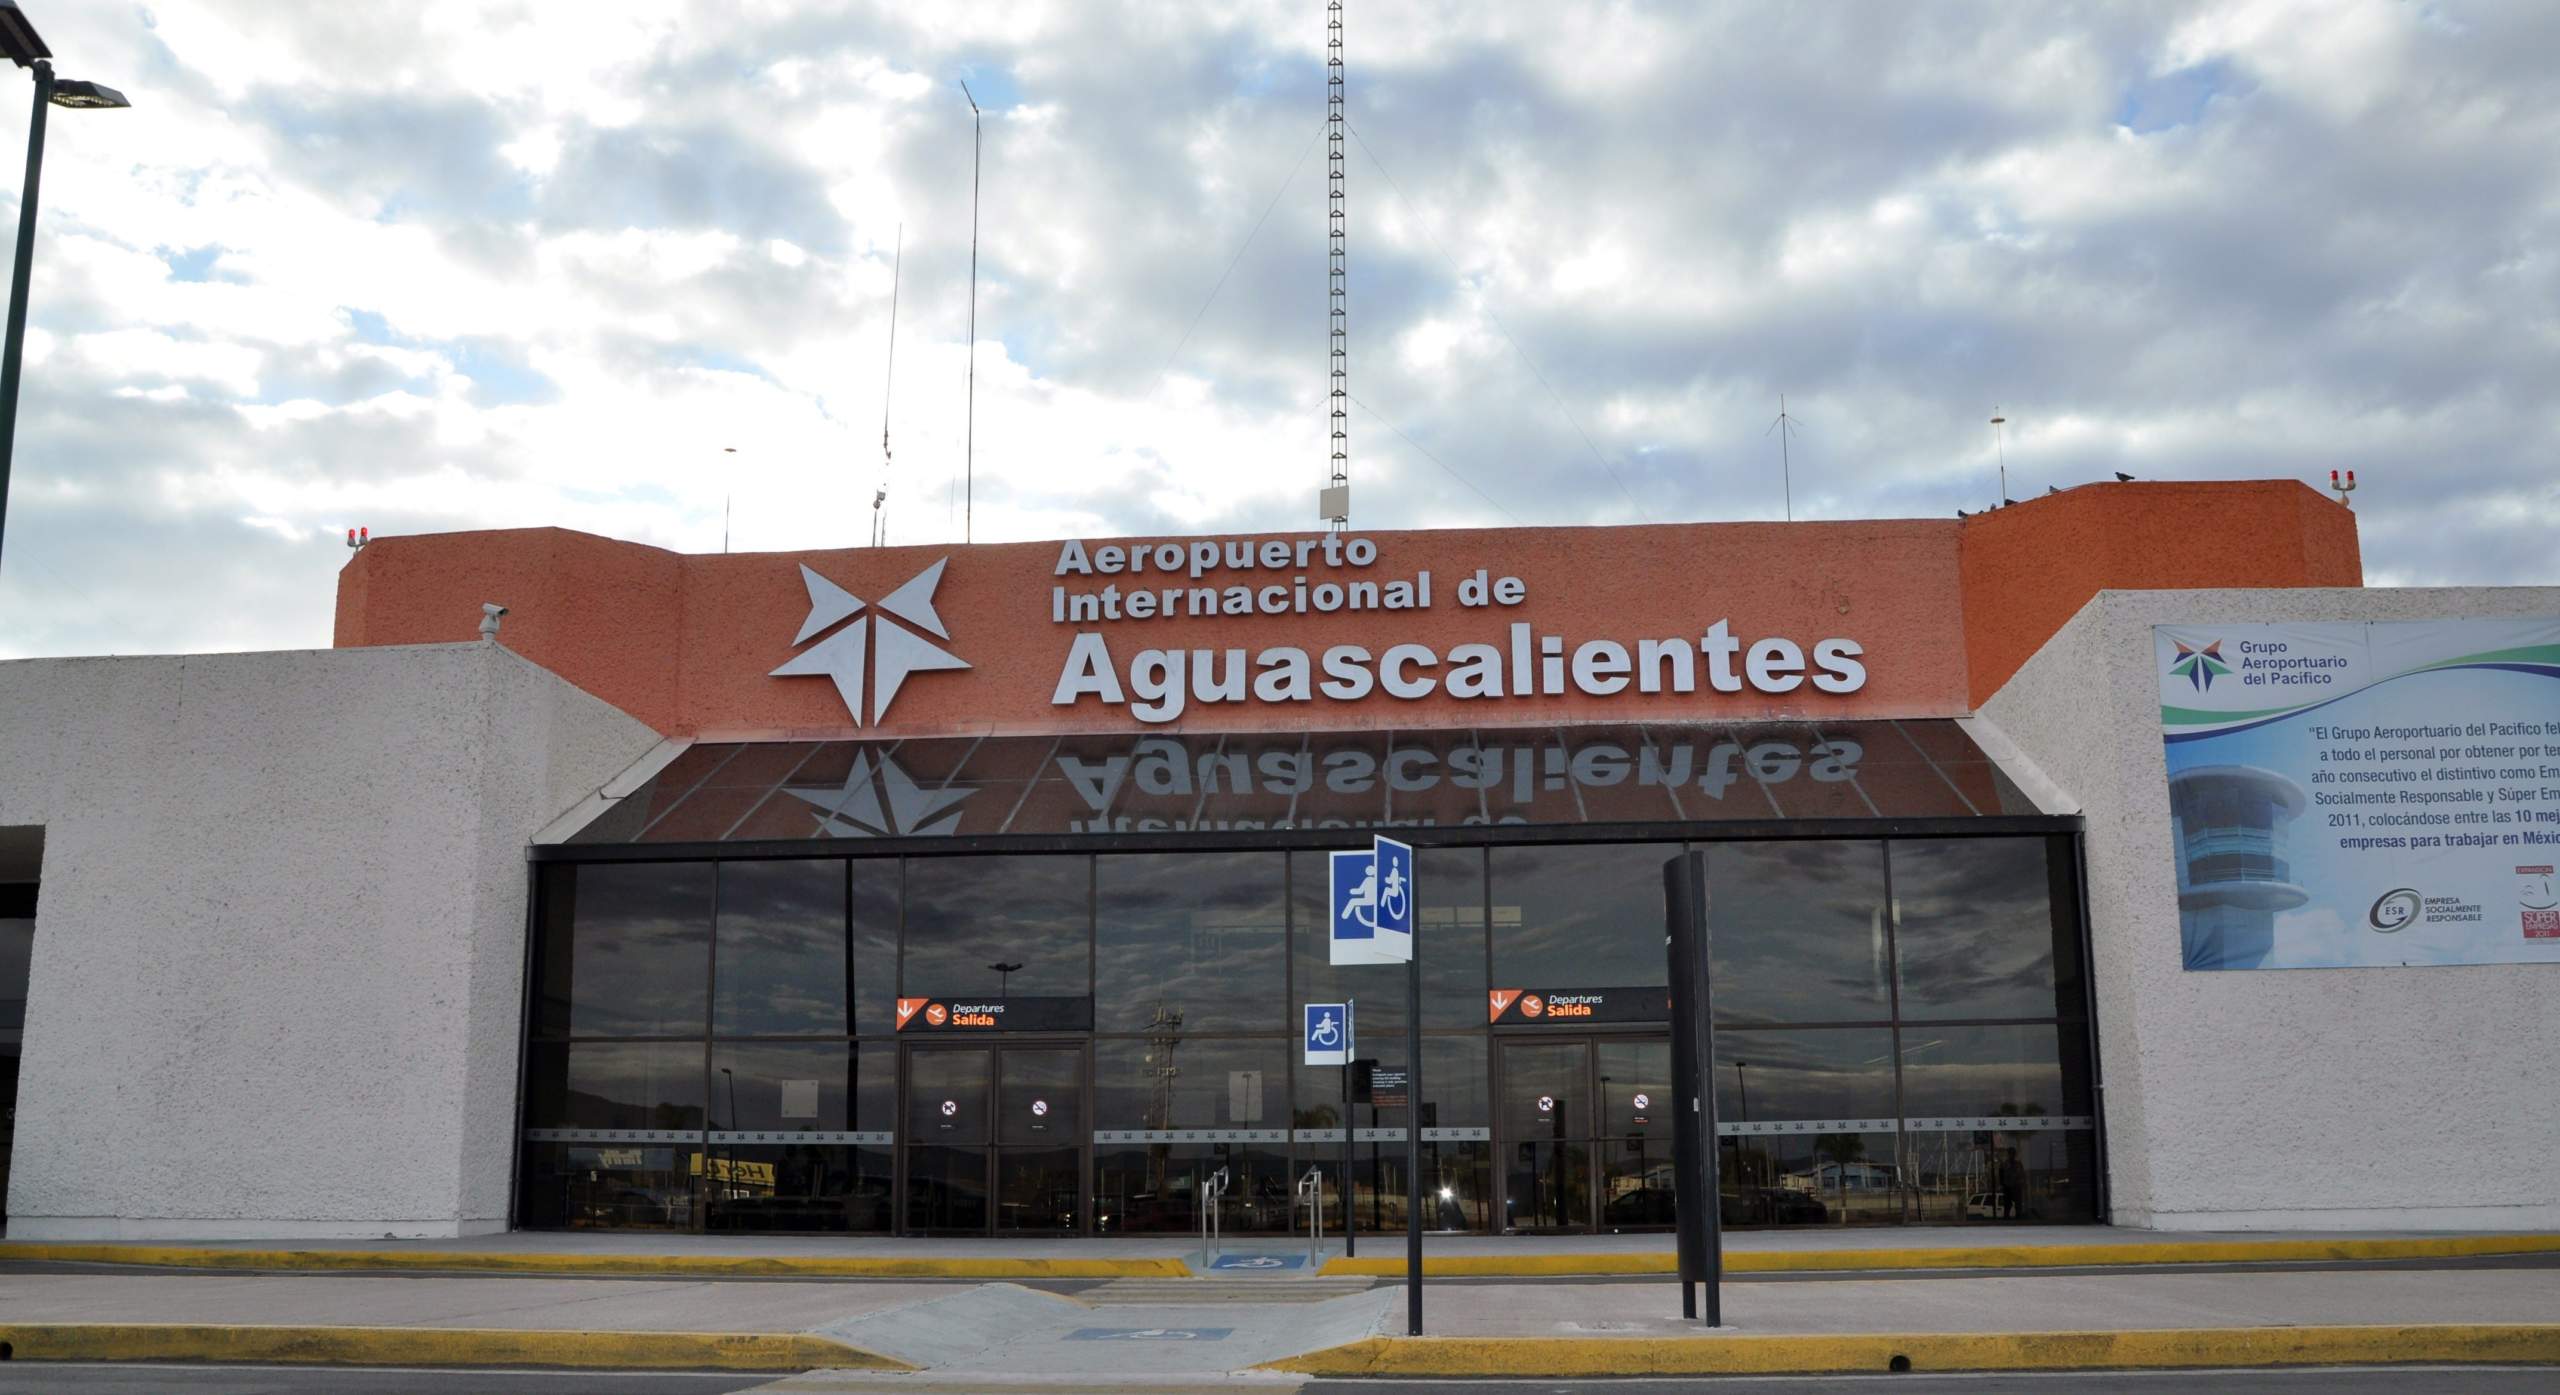 GAP invests US$17 million in Aguascalientes Airport